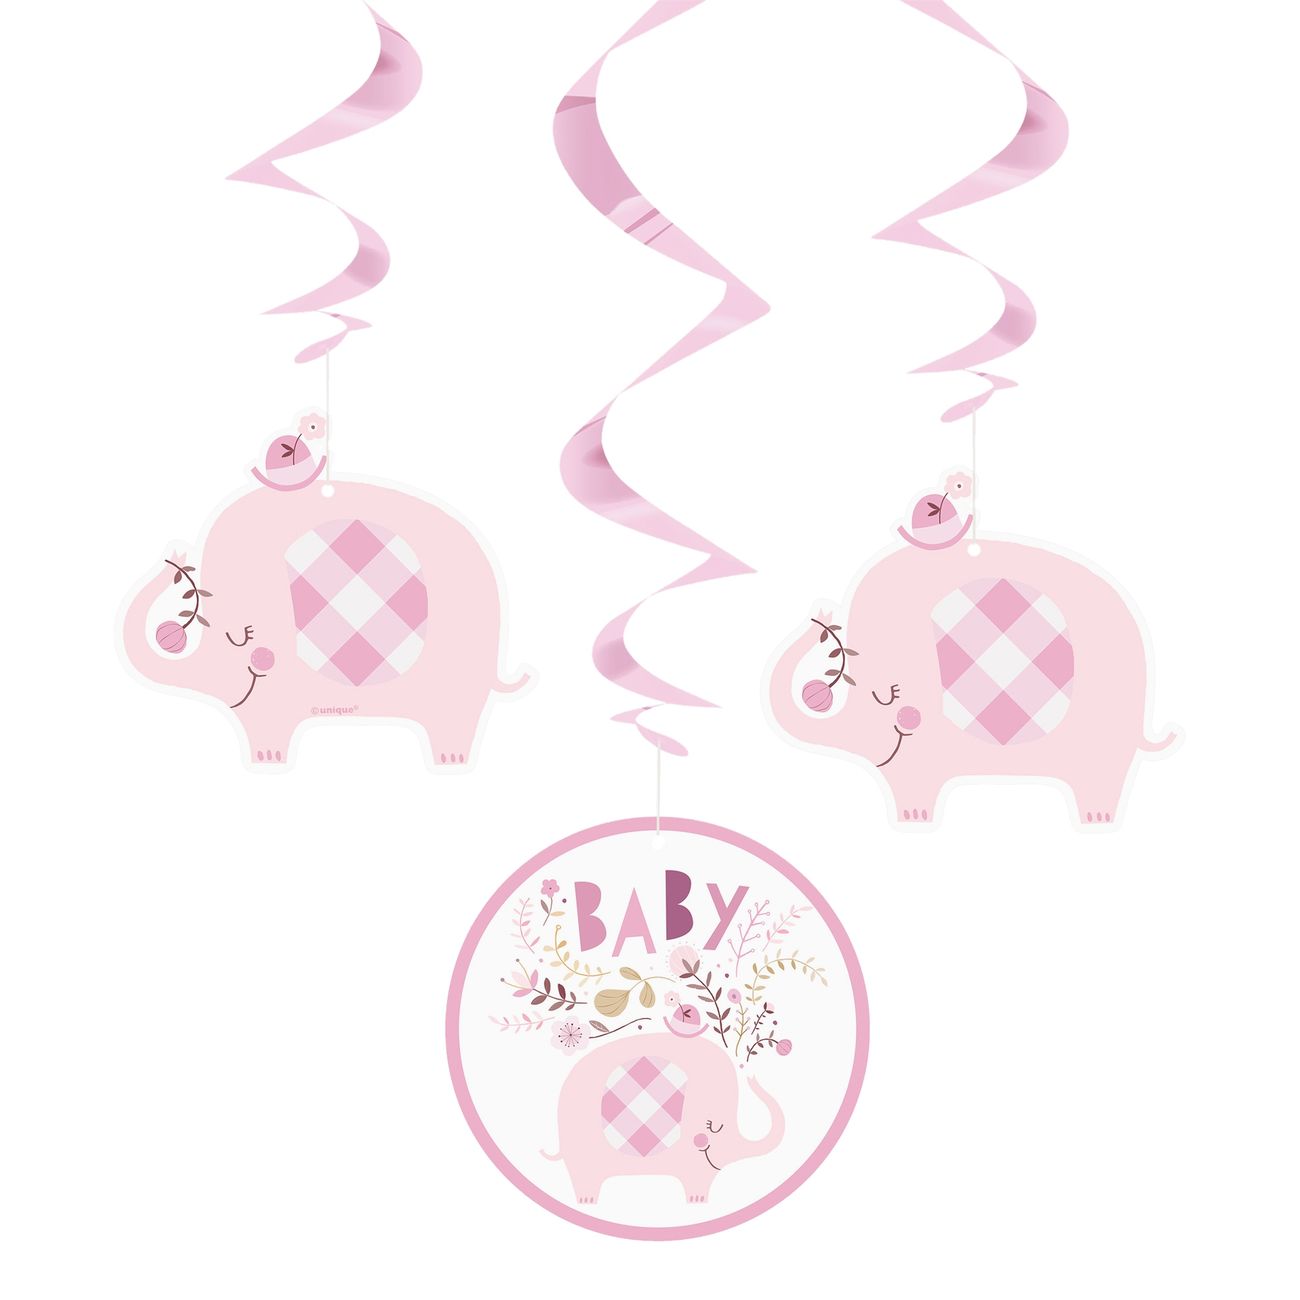 swirls-rosa-elefanter-baby-shower-87059-1